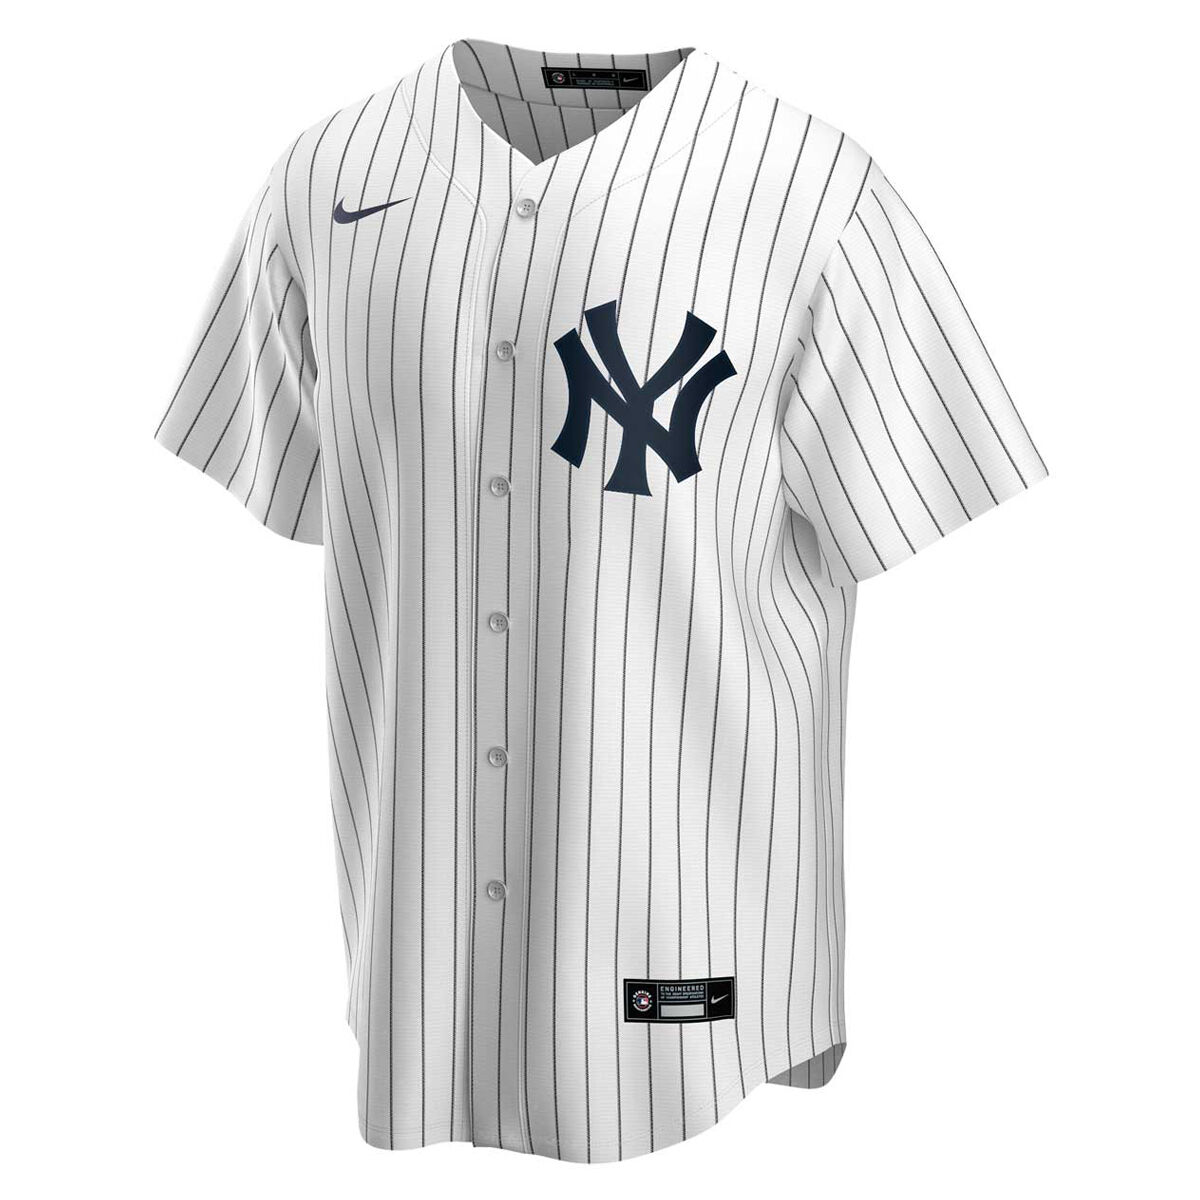 new york yankees uniform 2020